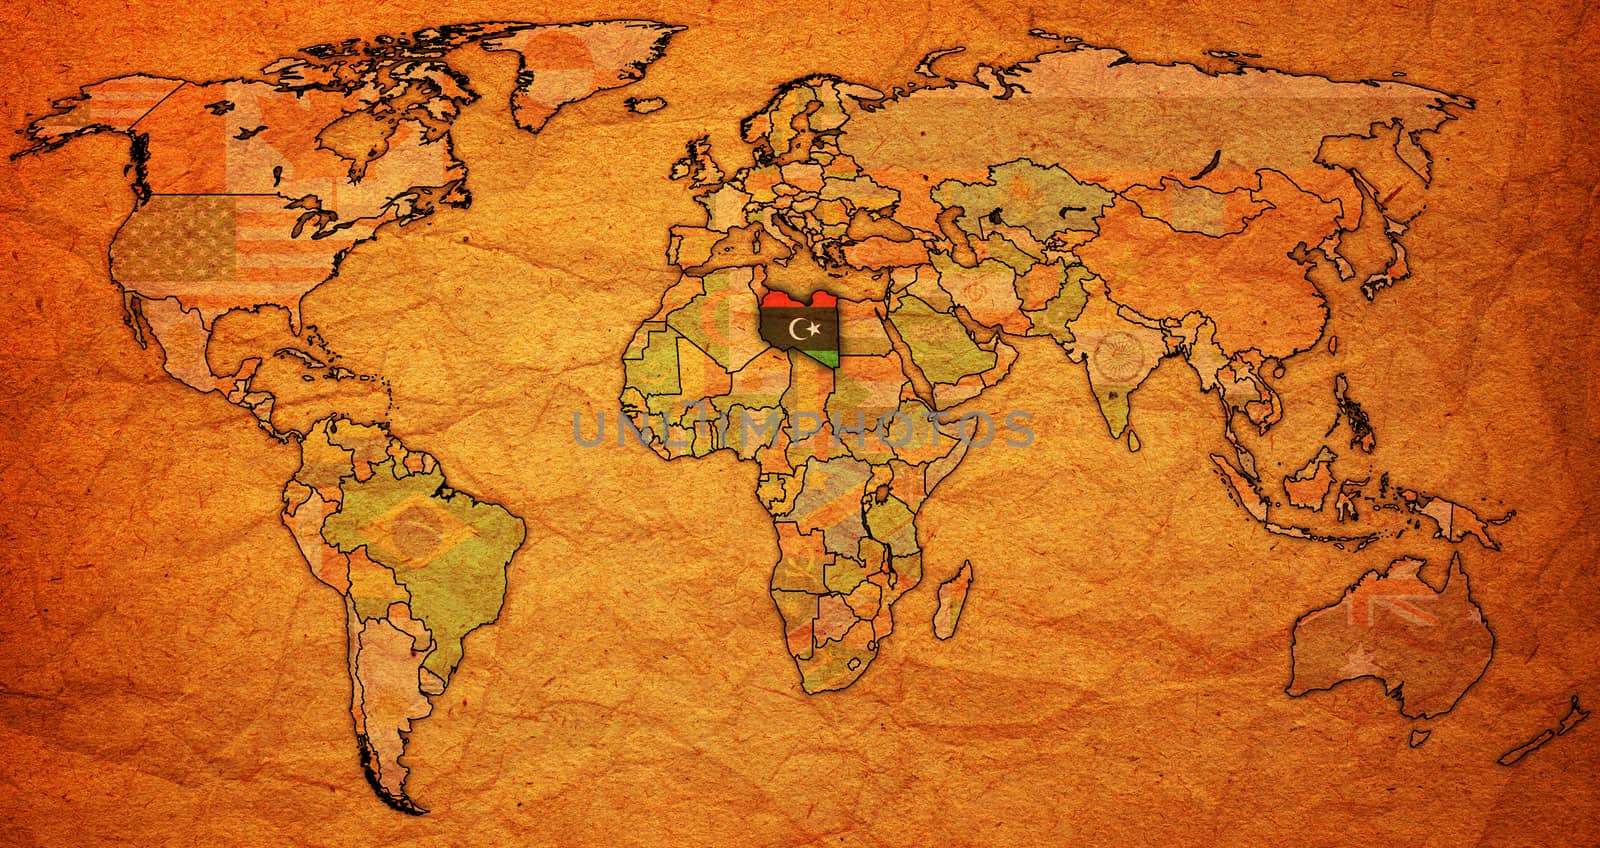 libya flag on old vintage world map with national borders